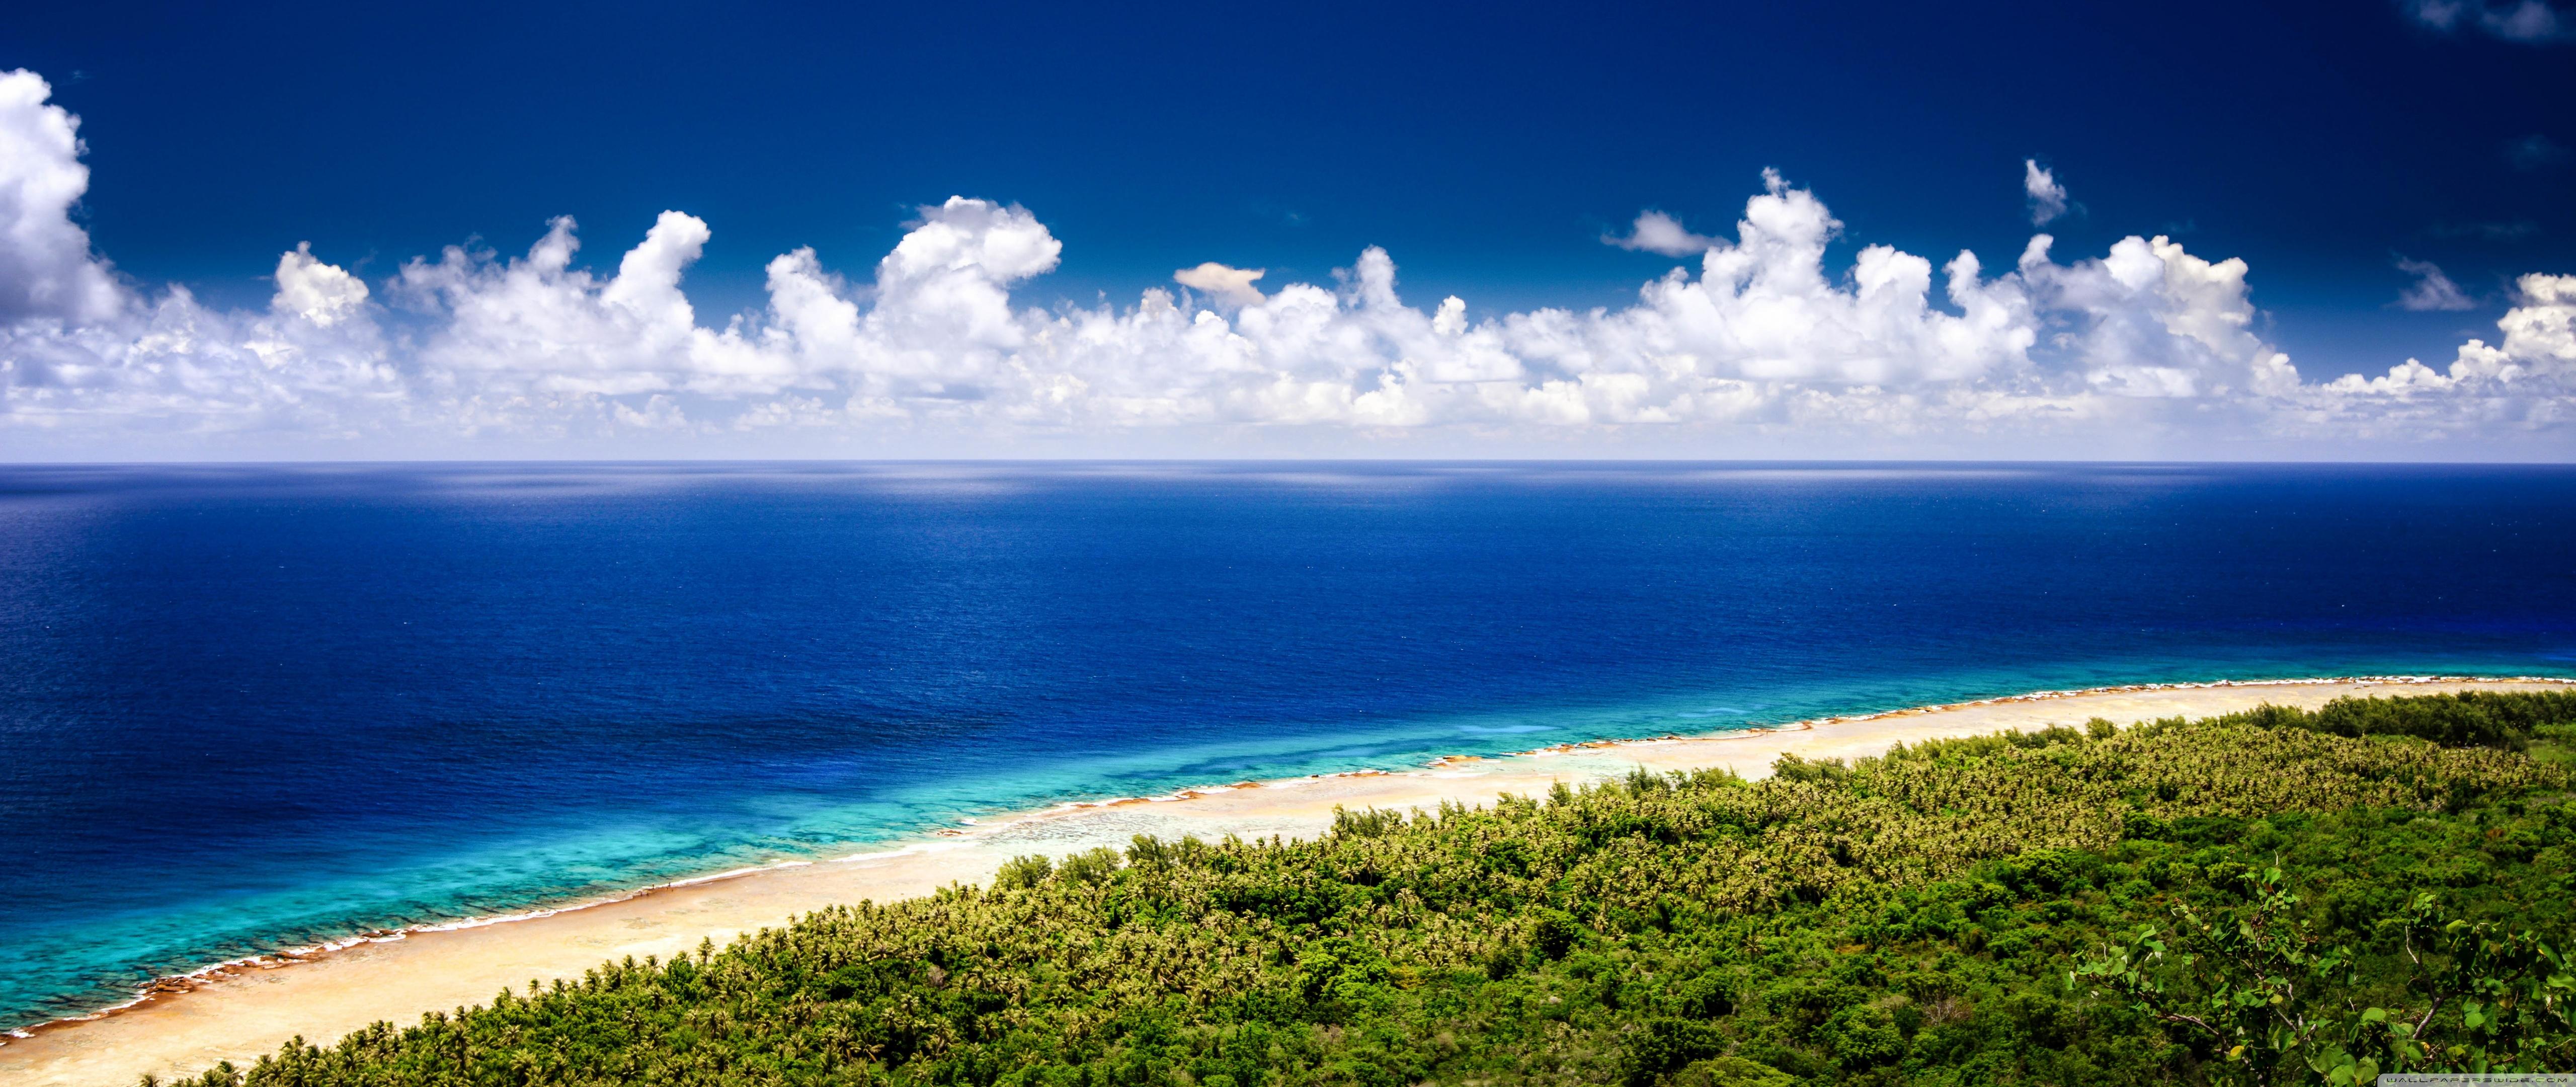 Guam Beaches ❤ 4K HD Desktop Wallpapers for 4K Ultra HD TV • Wide